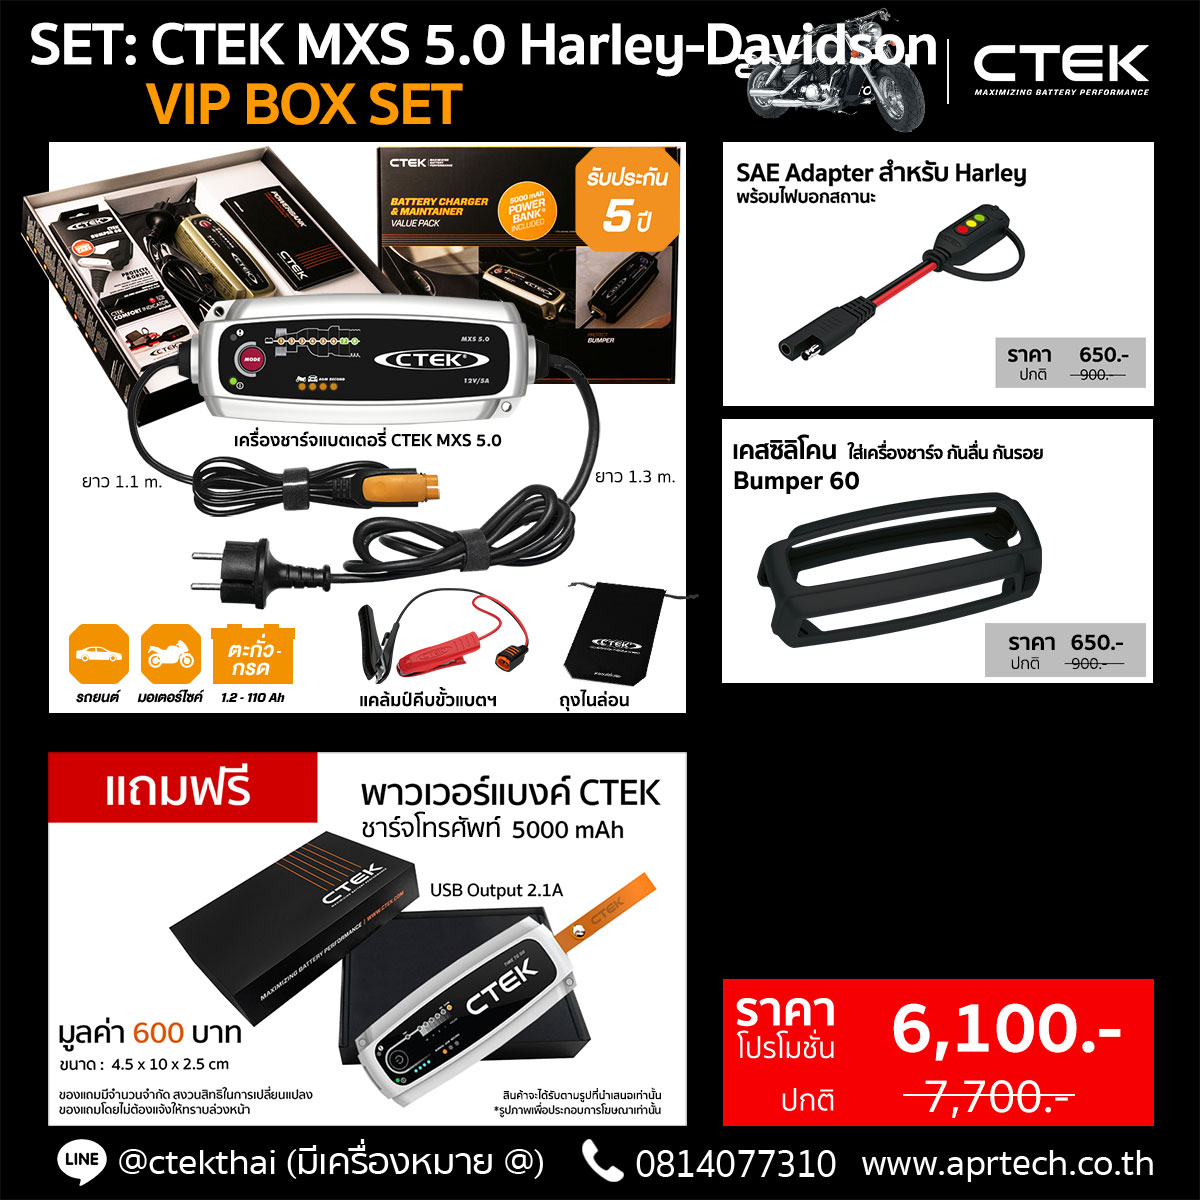 SET CTEK MXS 5.0 Harley-Davidson VIP BOX SET (CTEK MXS 5.0 + Indicator Pigtail + Bumper)